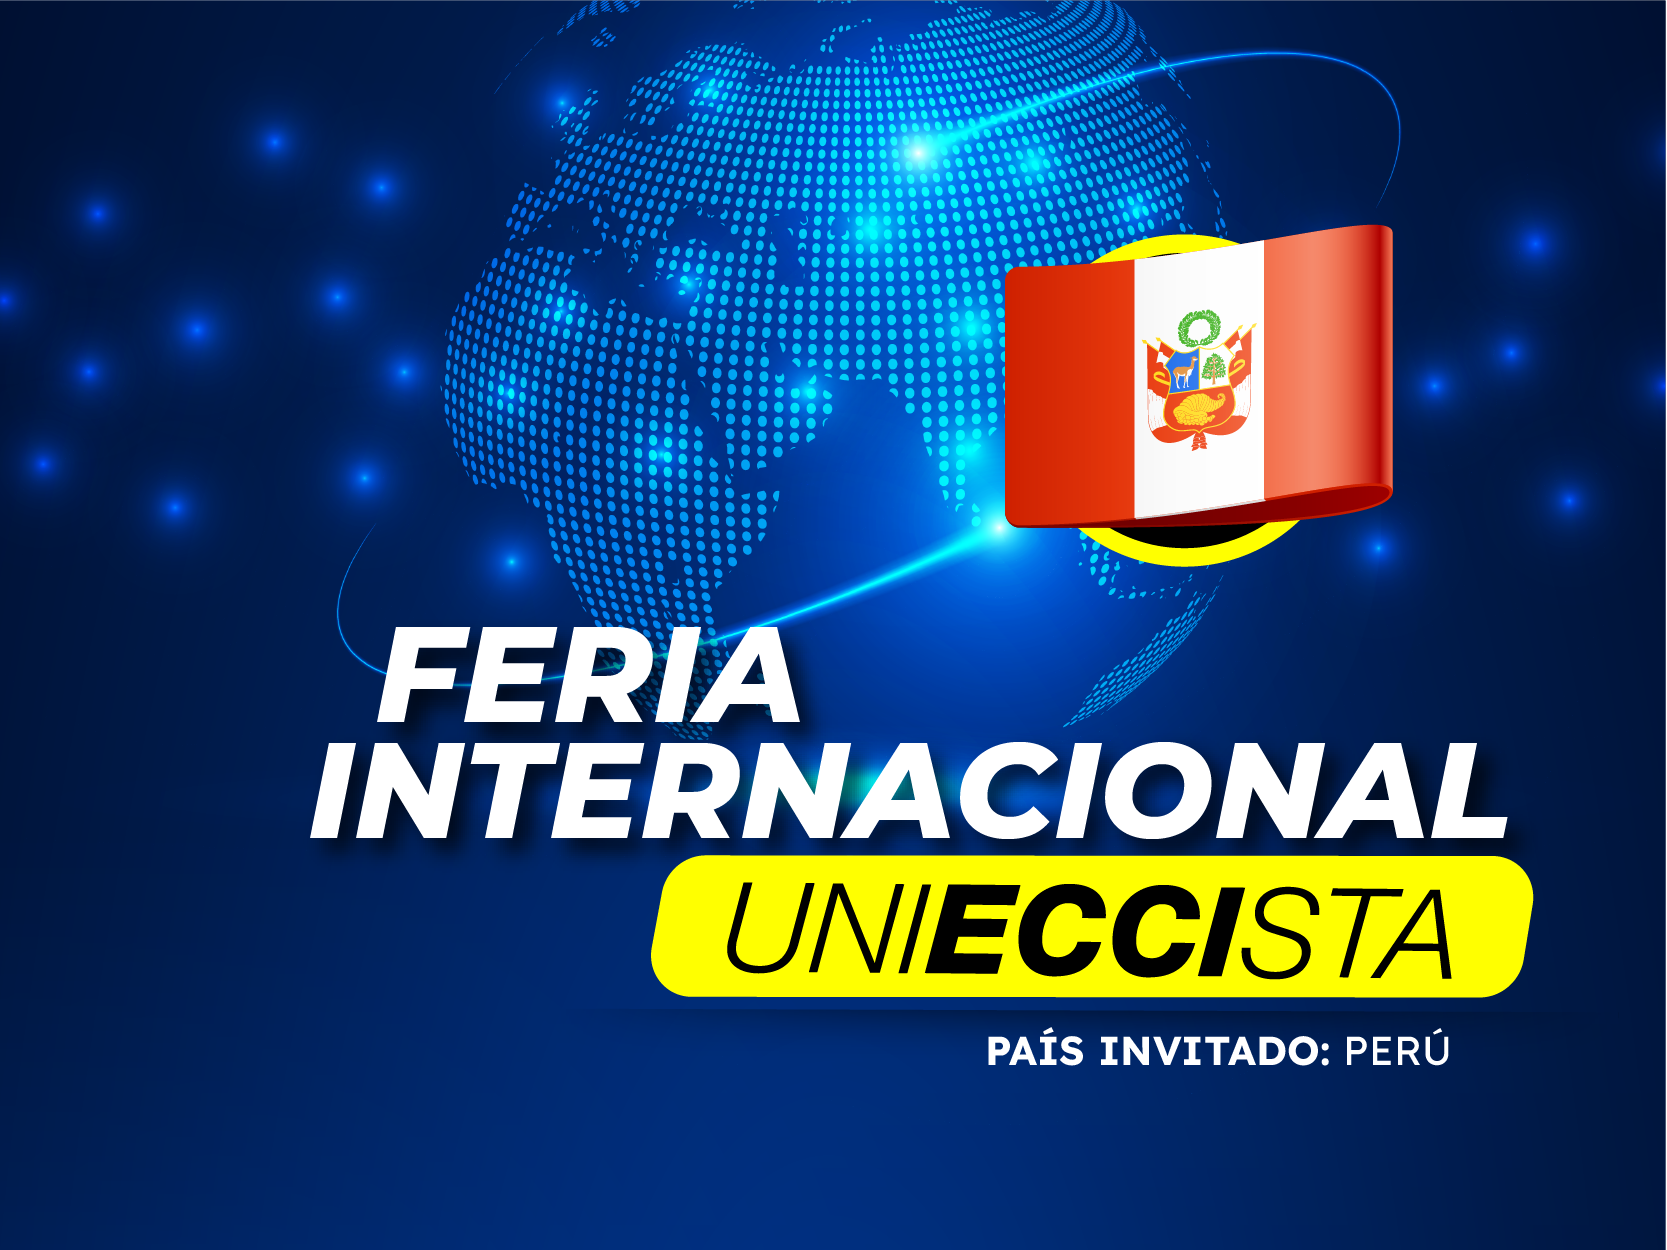 Feria internacional UniECCIsta